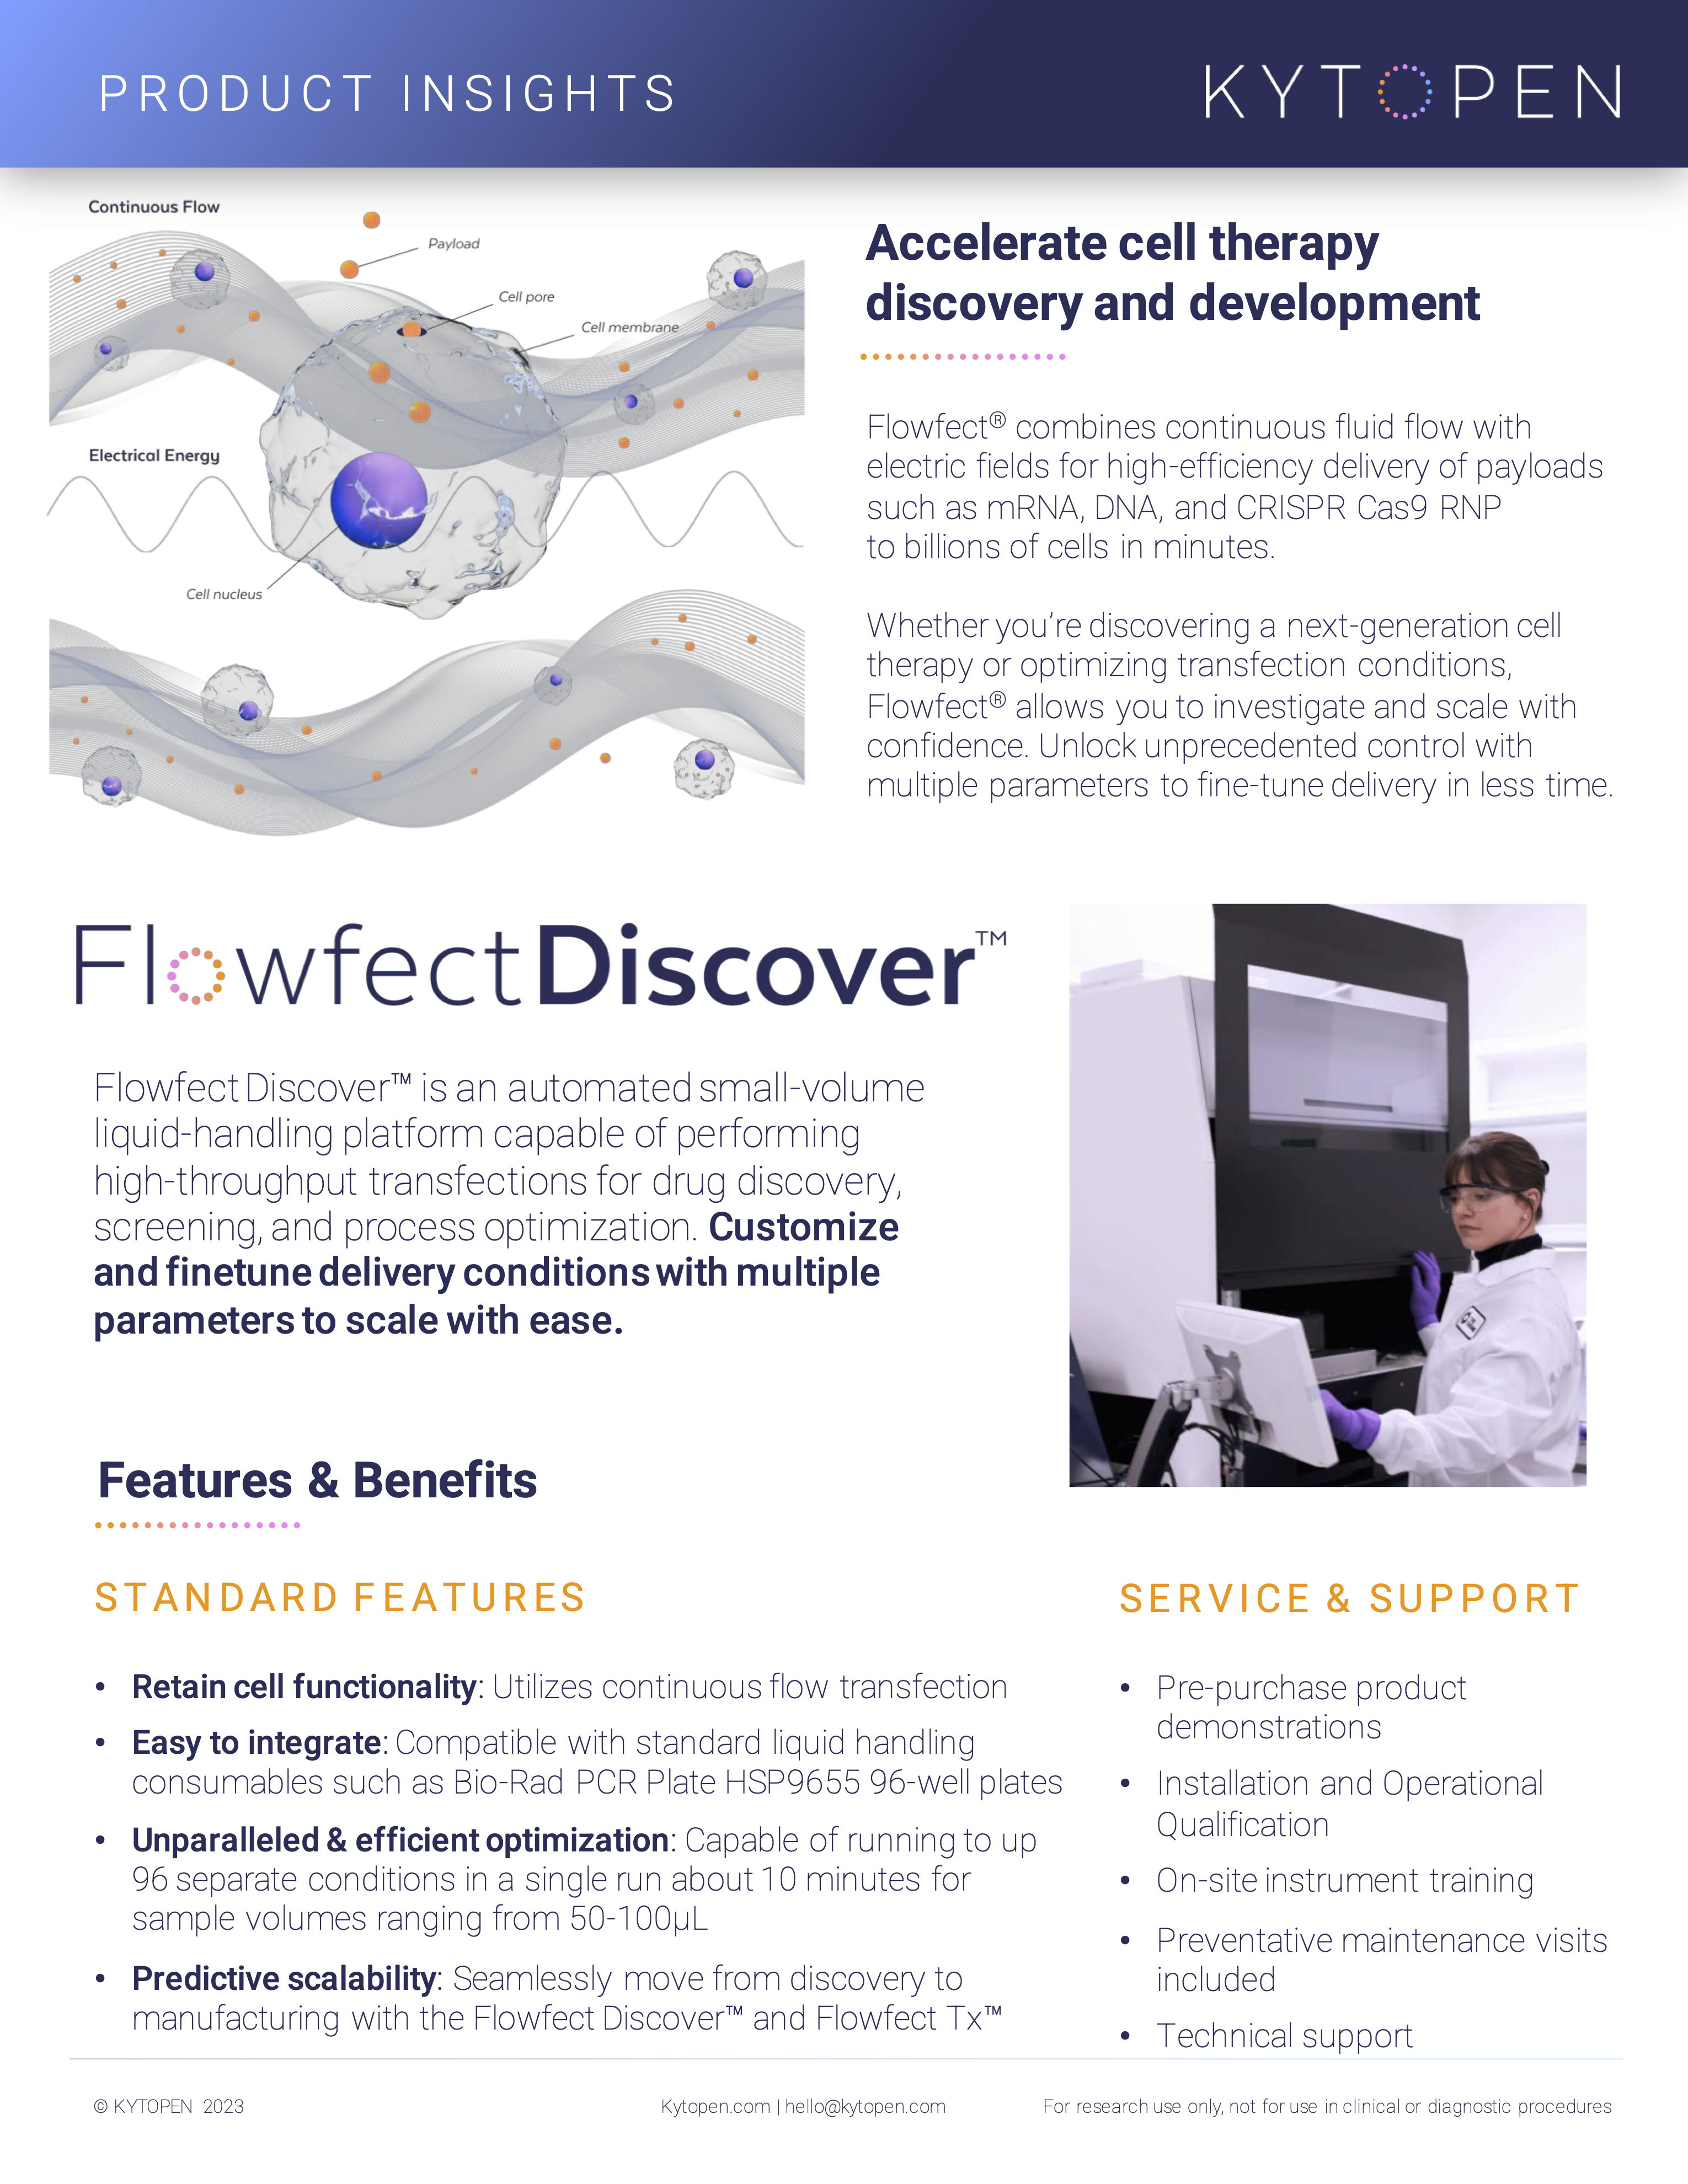 Flowfect Discover